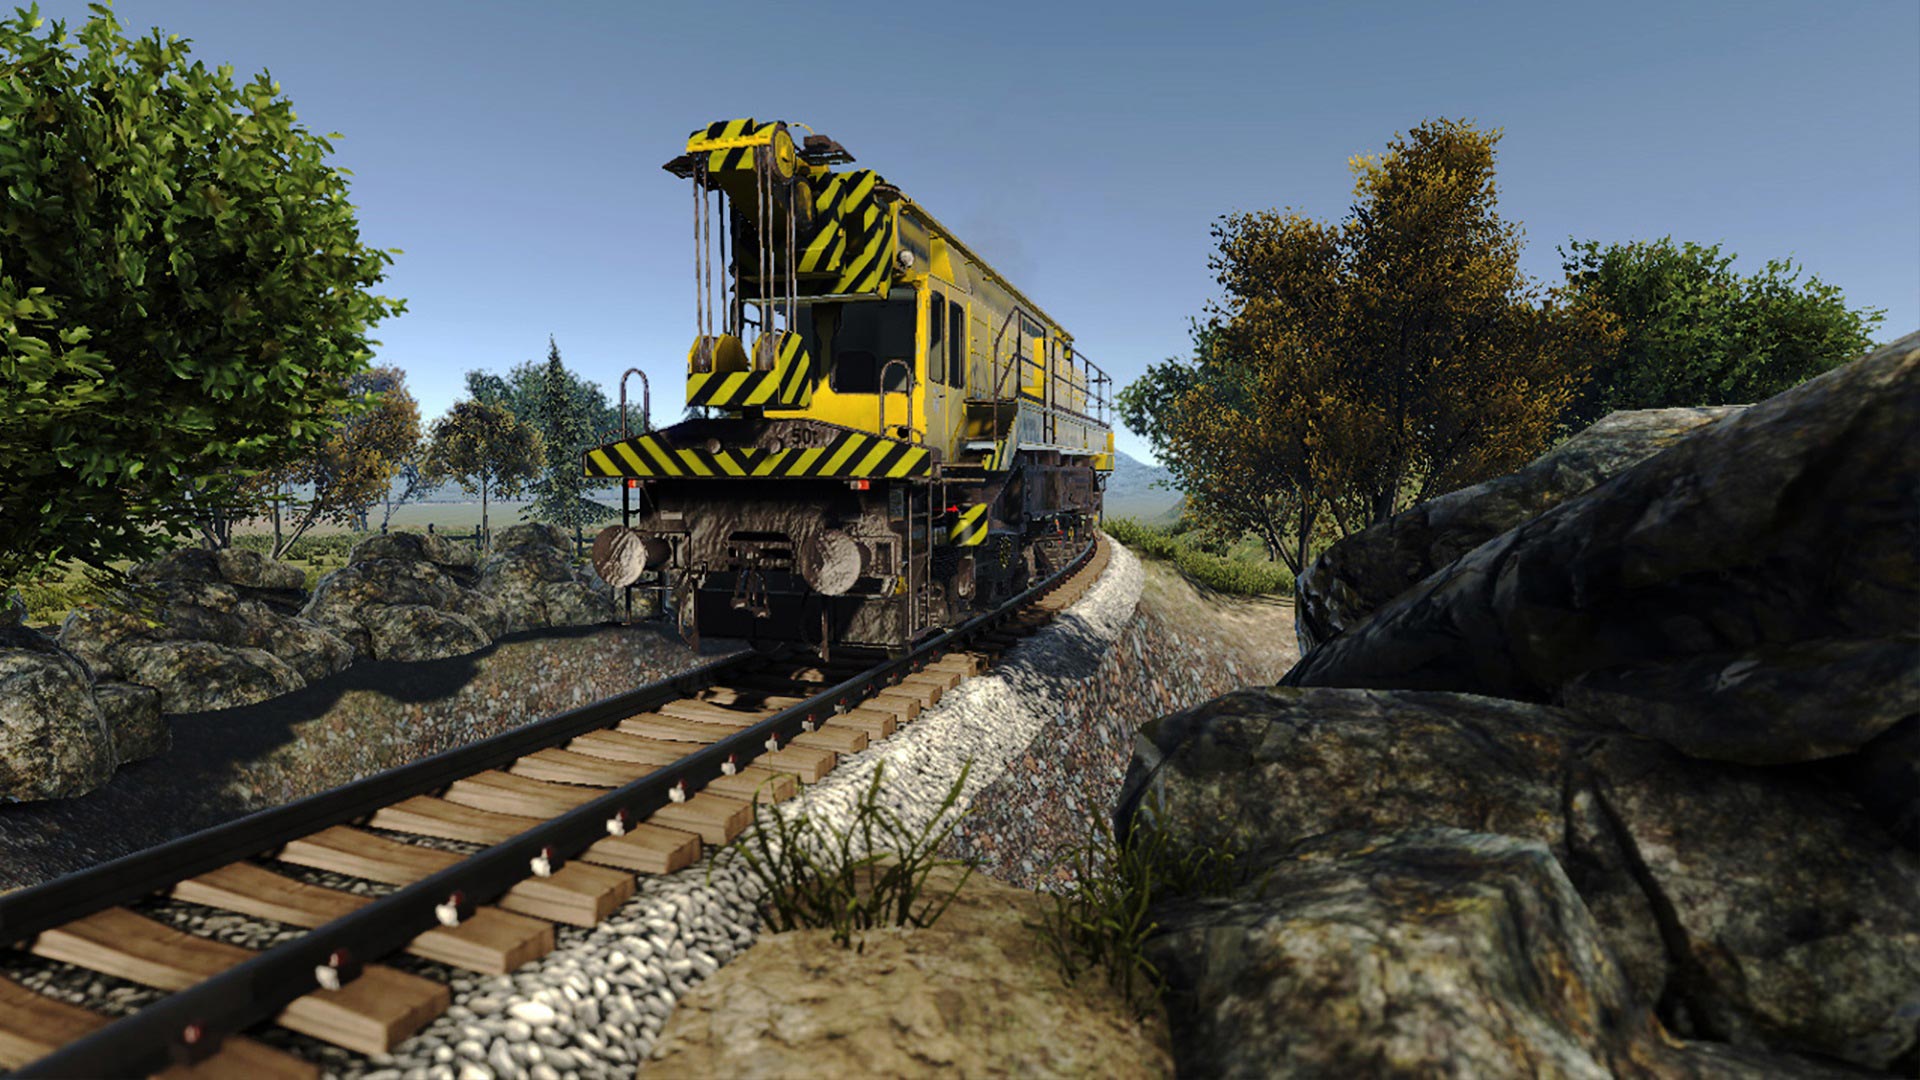 Train mechanic simulator. Трайн симулятор 2017. Симулятор поезда на рельсах. Train Simulator 2016.